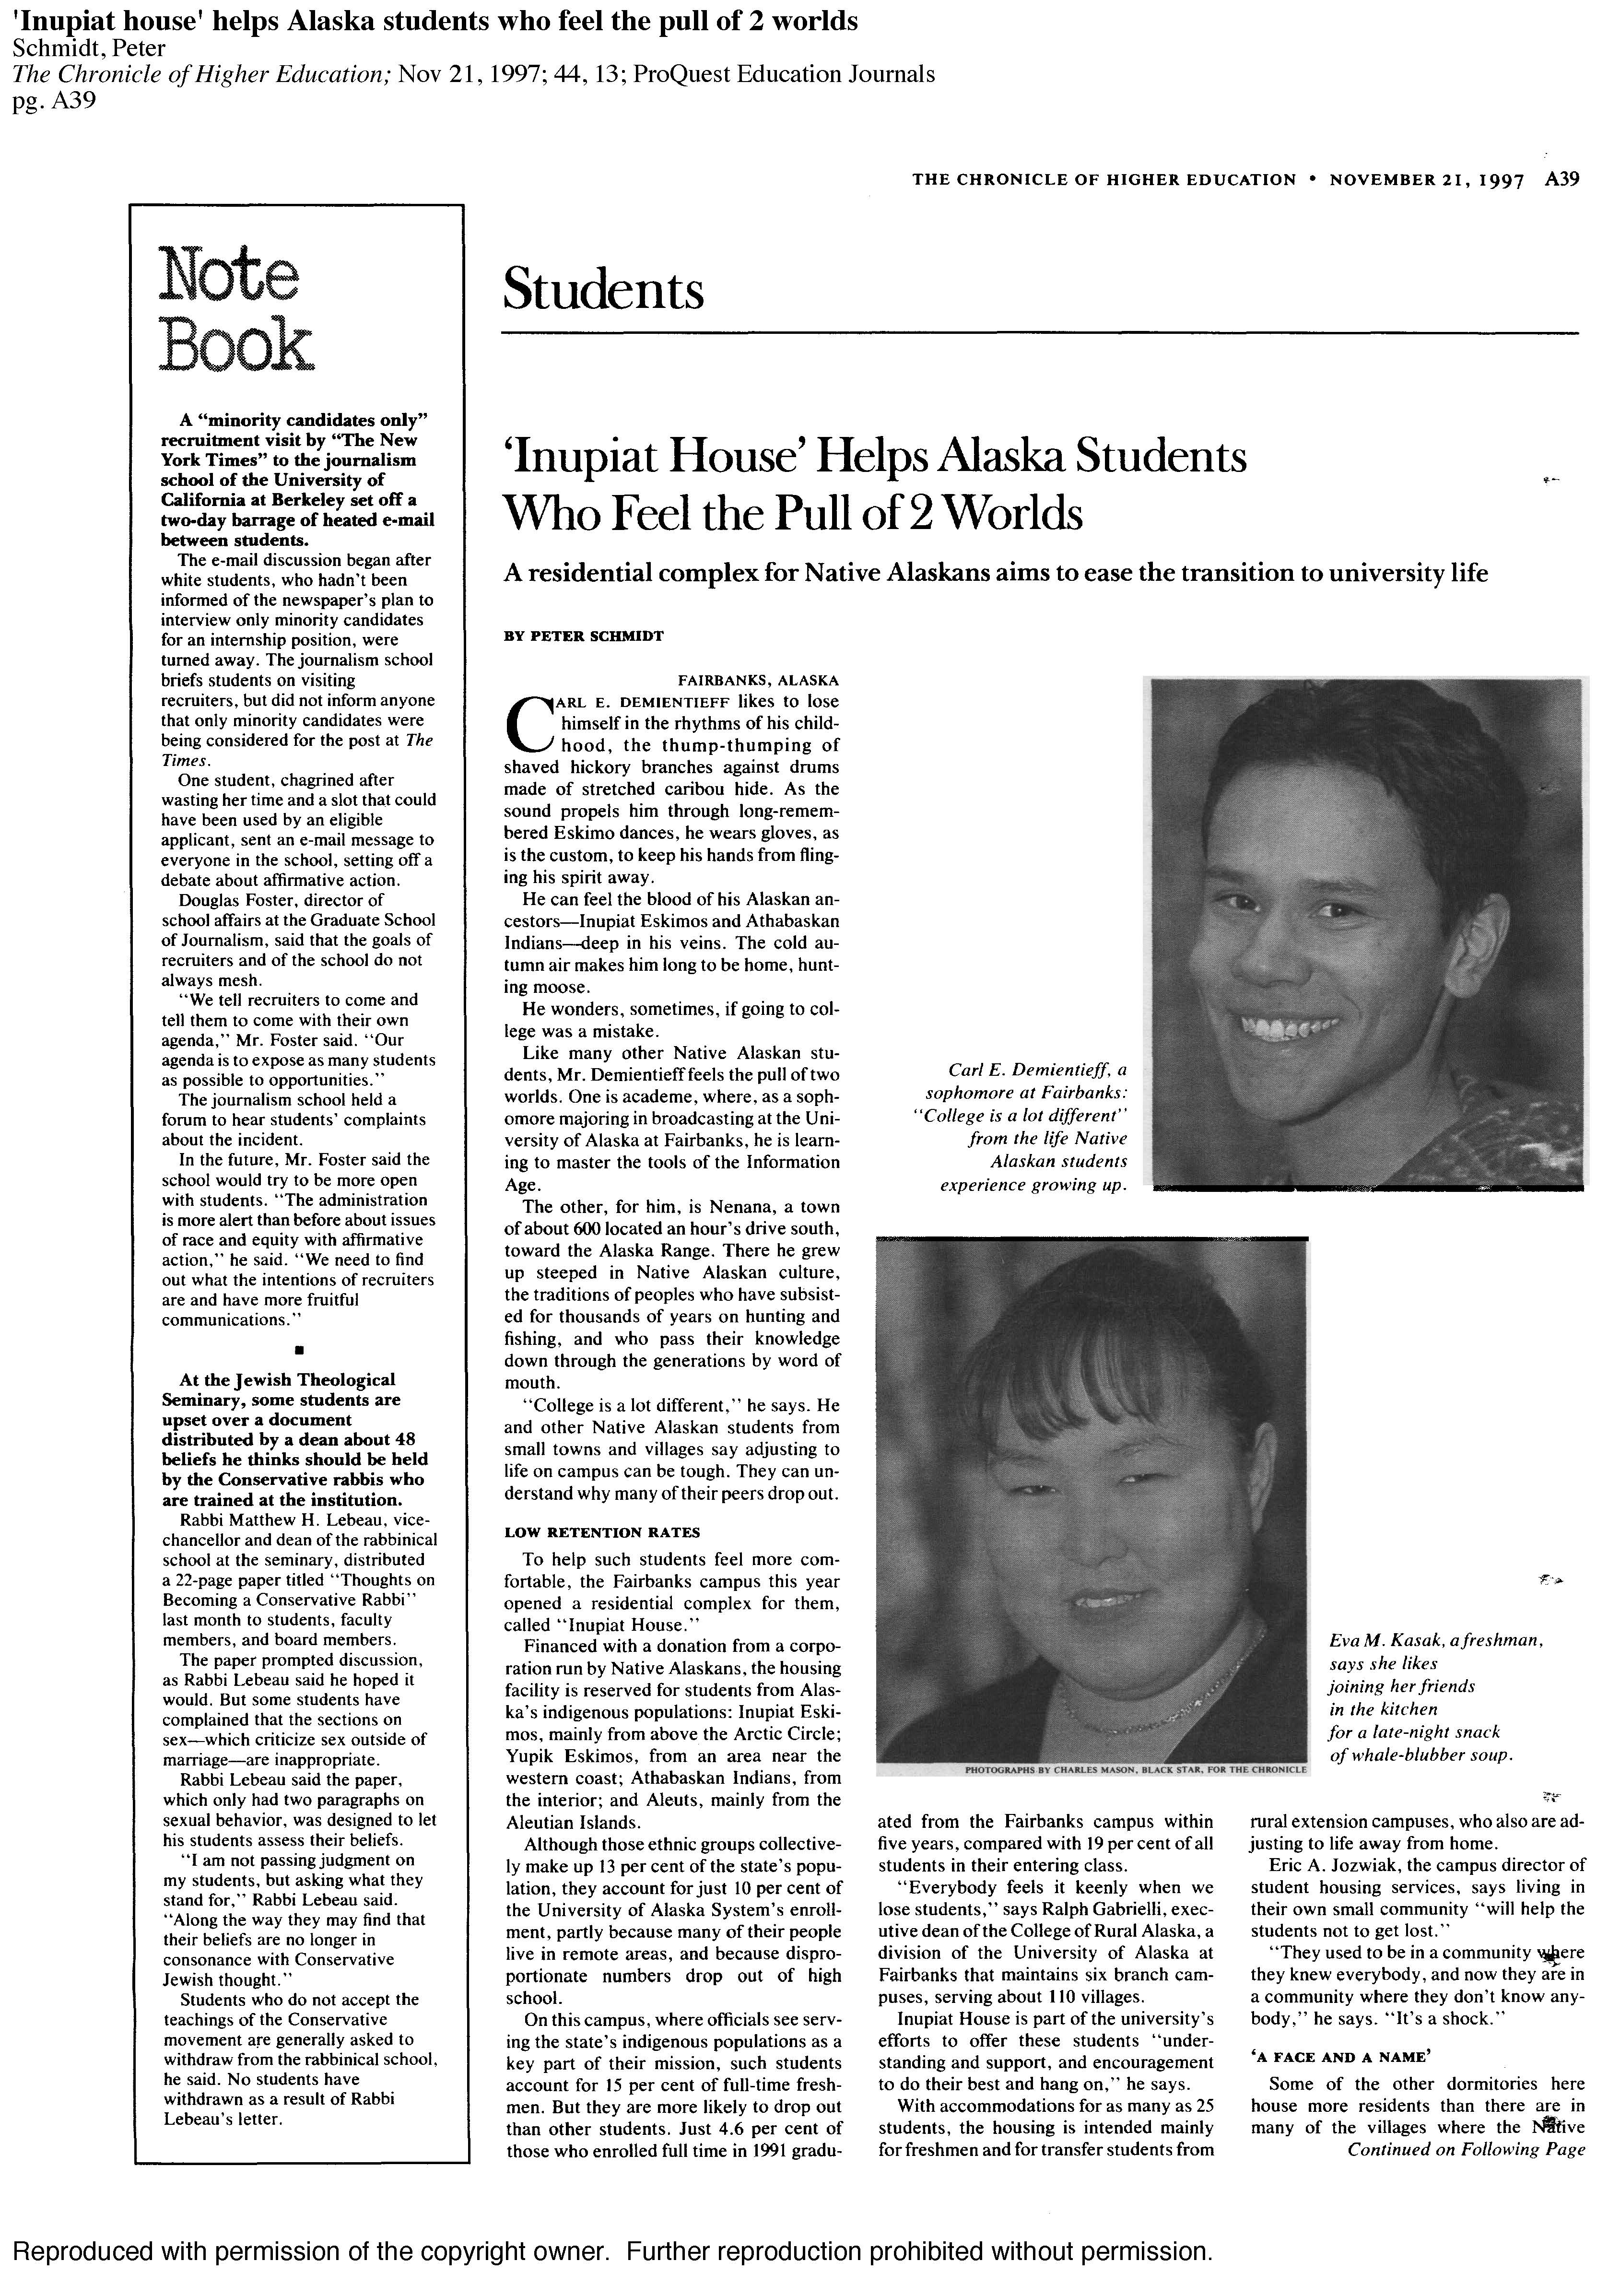 thumbnail image of printed 1997 Inupiat House article